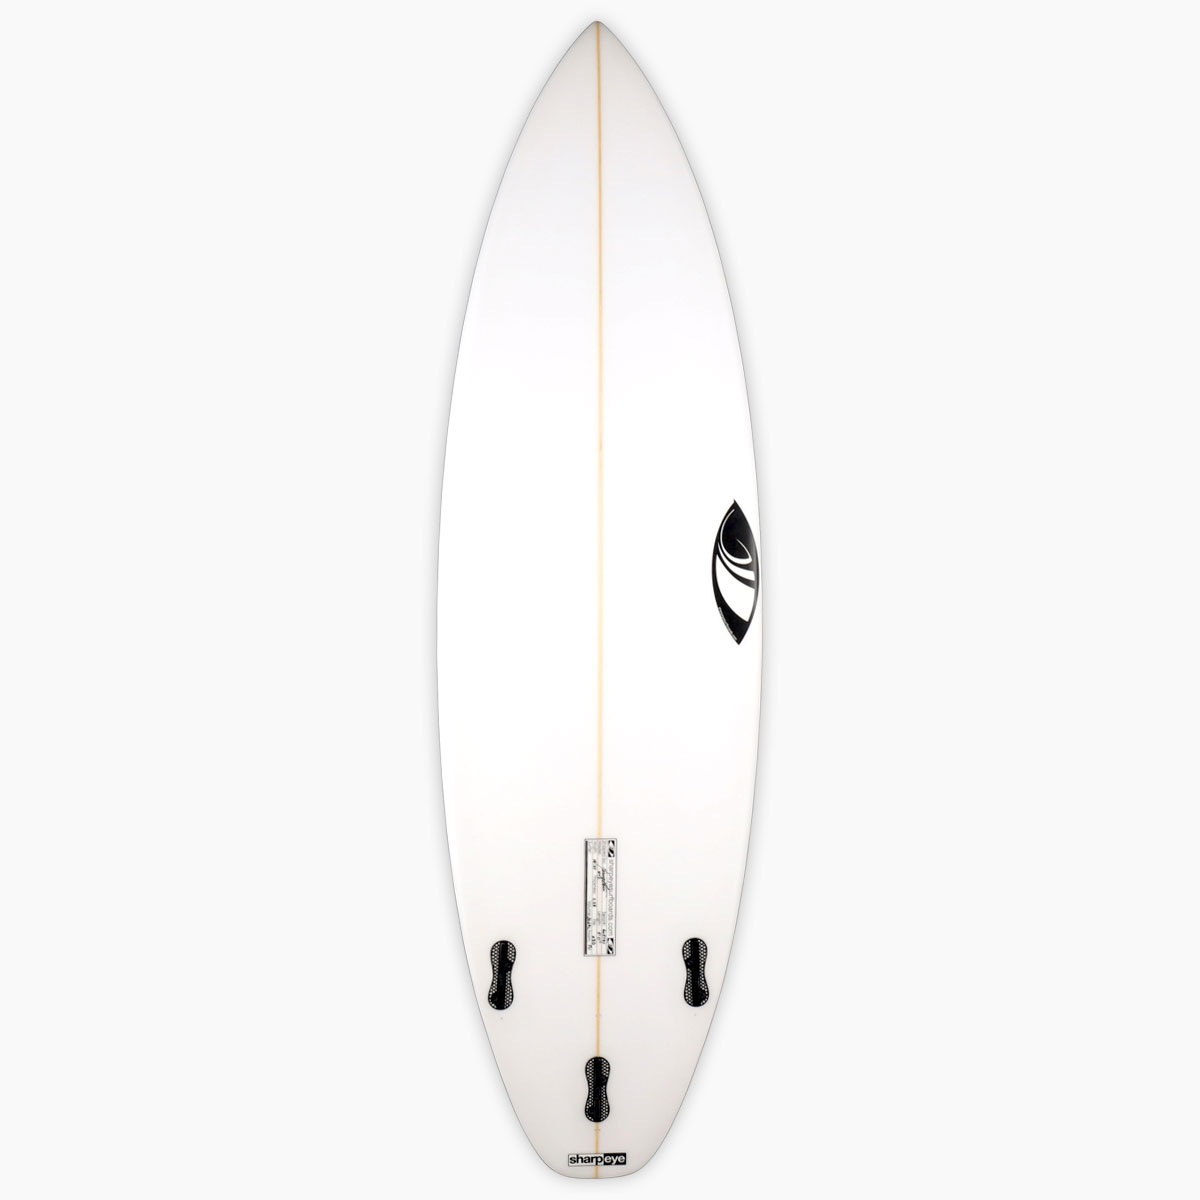 SurfBoardNet / ブランド:SHARP EYE SURFBOARDS モデル:HT2